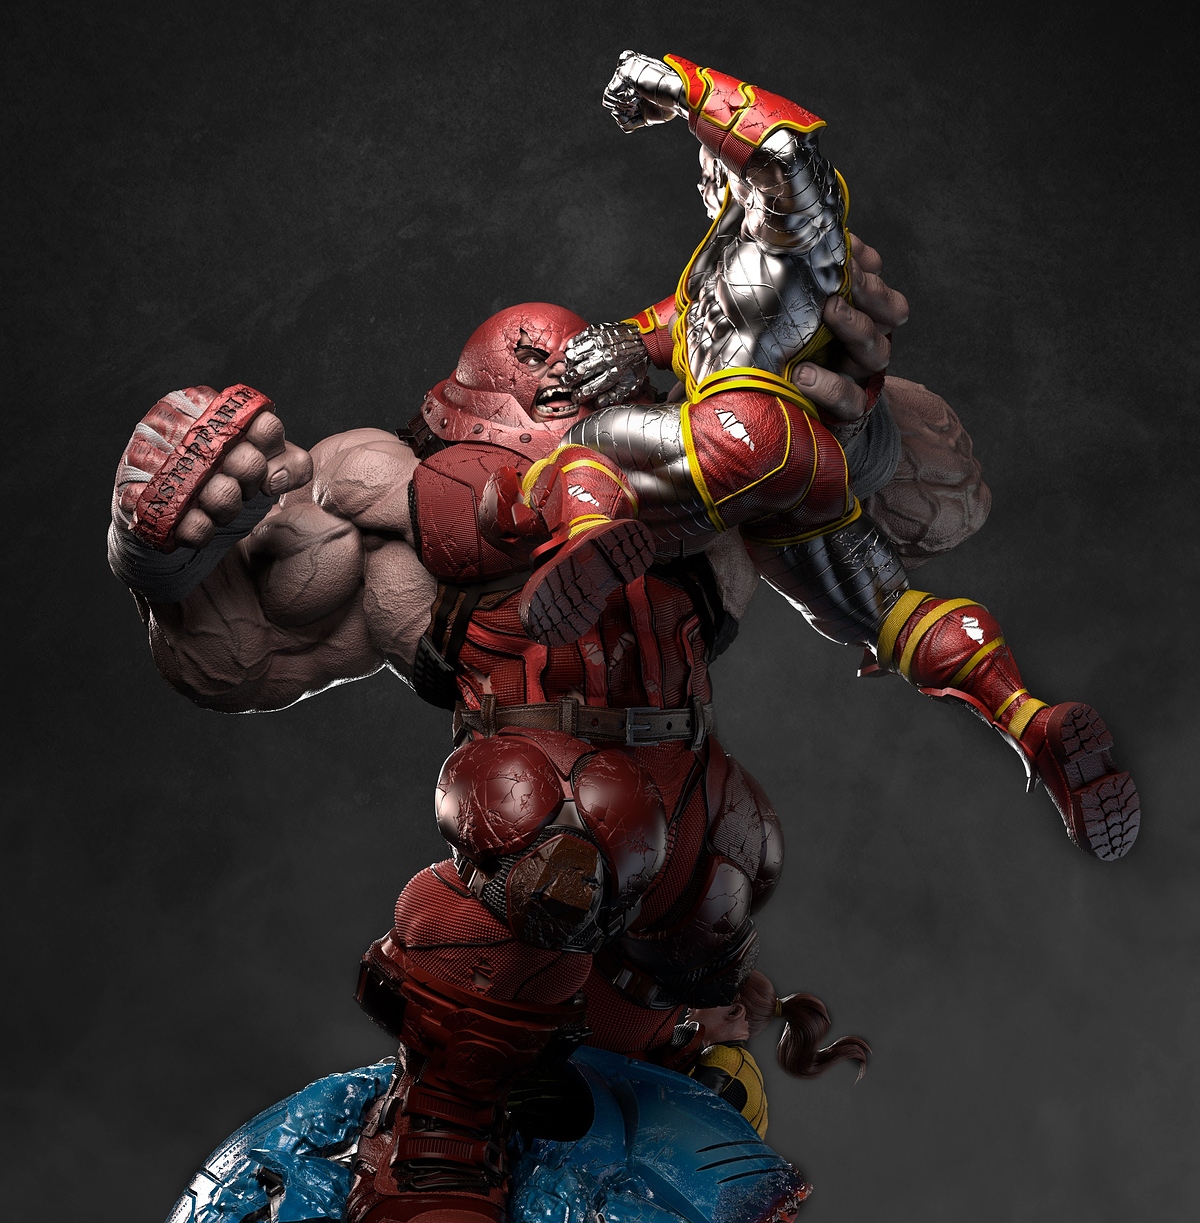 juggernaut vs colossus - image3